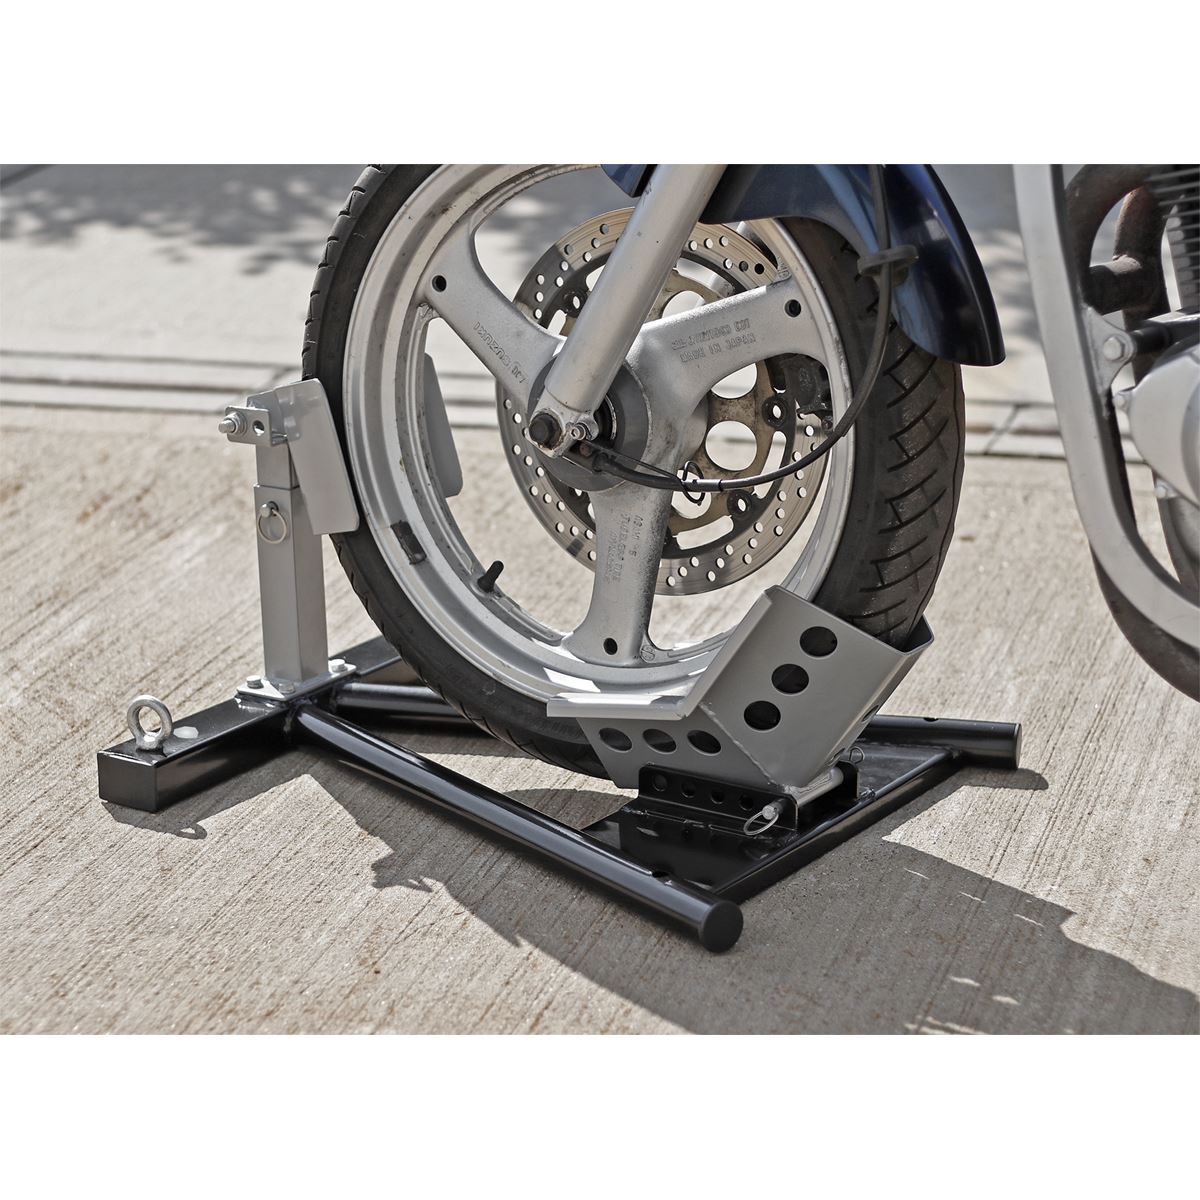 Sealey Heavy-Duty Motorcycle Front Wheel Chock